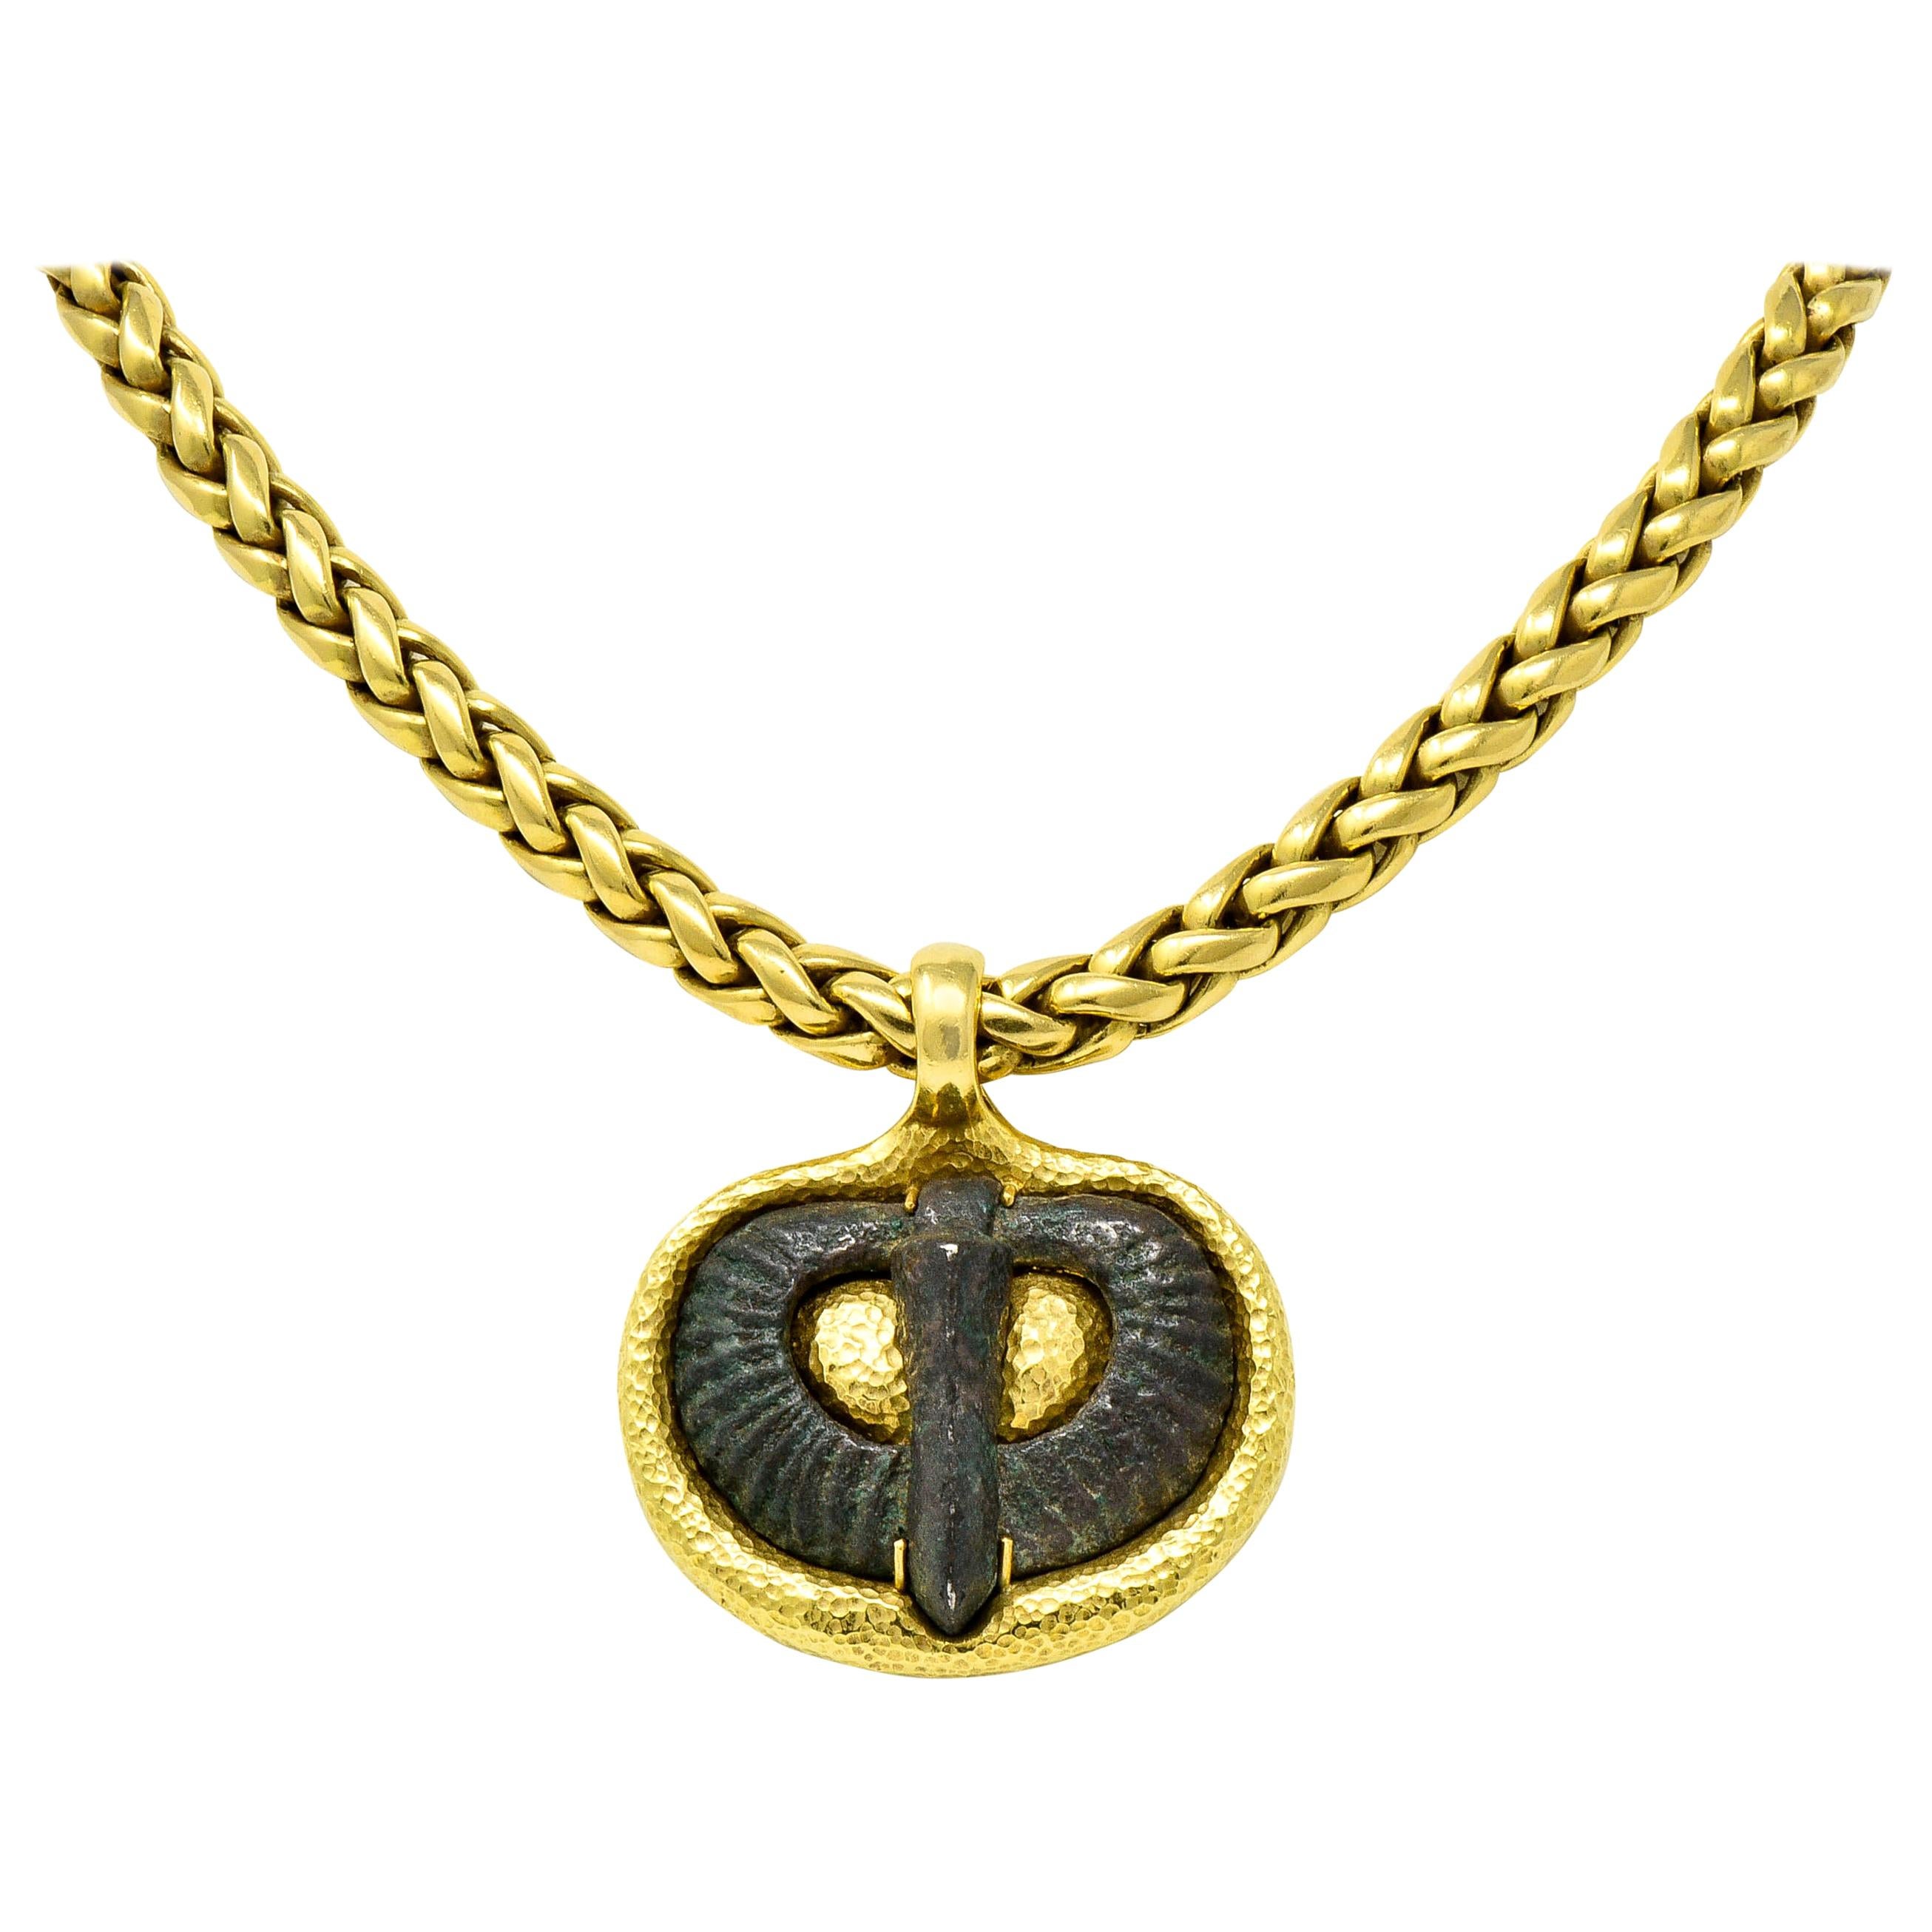 Elizabeth Gage 18 Karat Yellow Gold Serpentine Relic Pendant Necklace